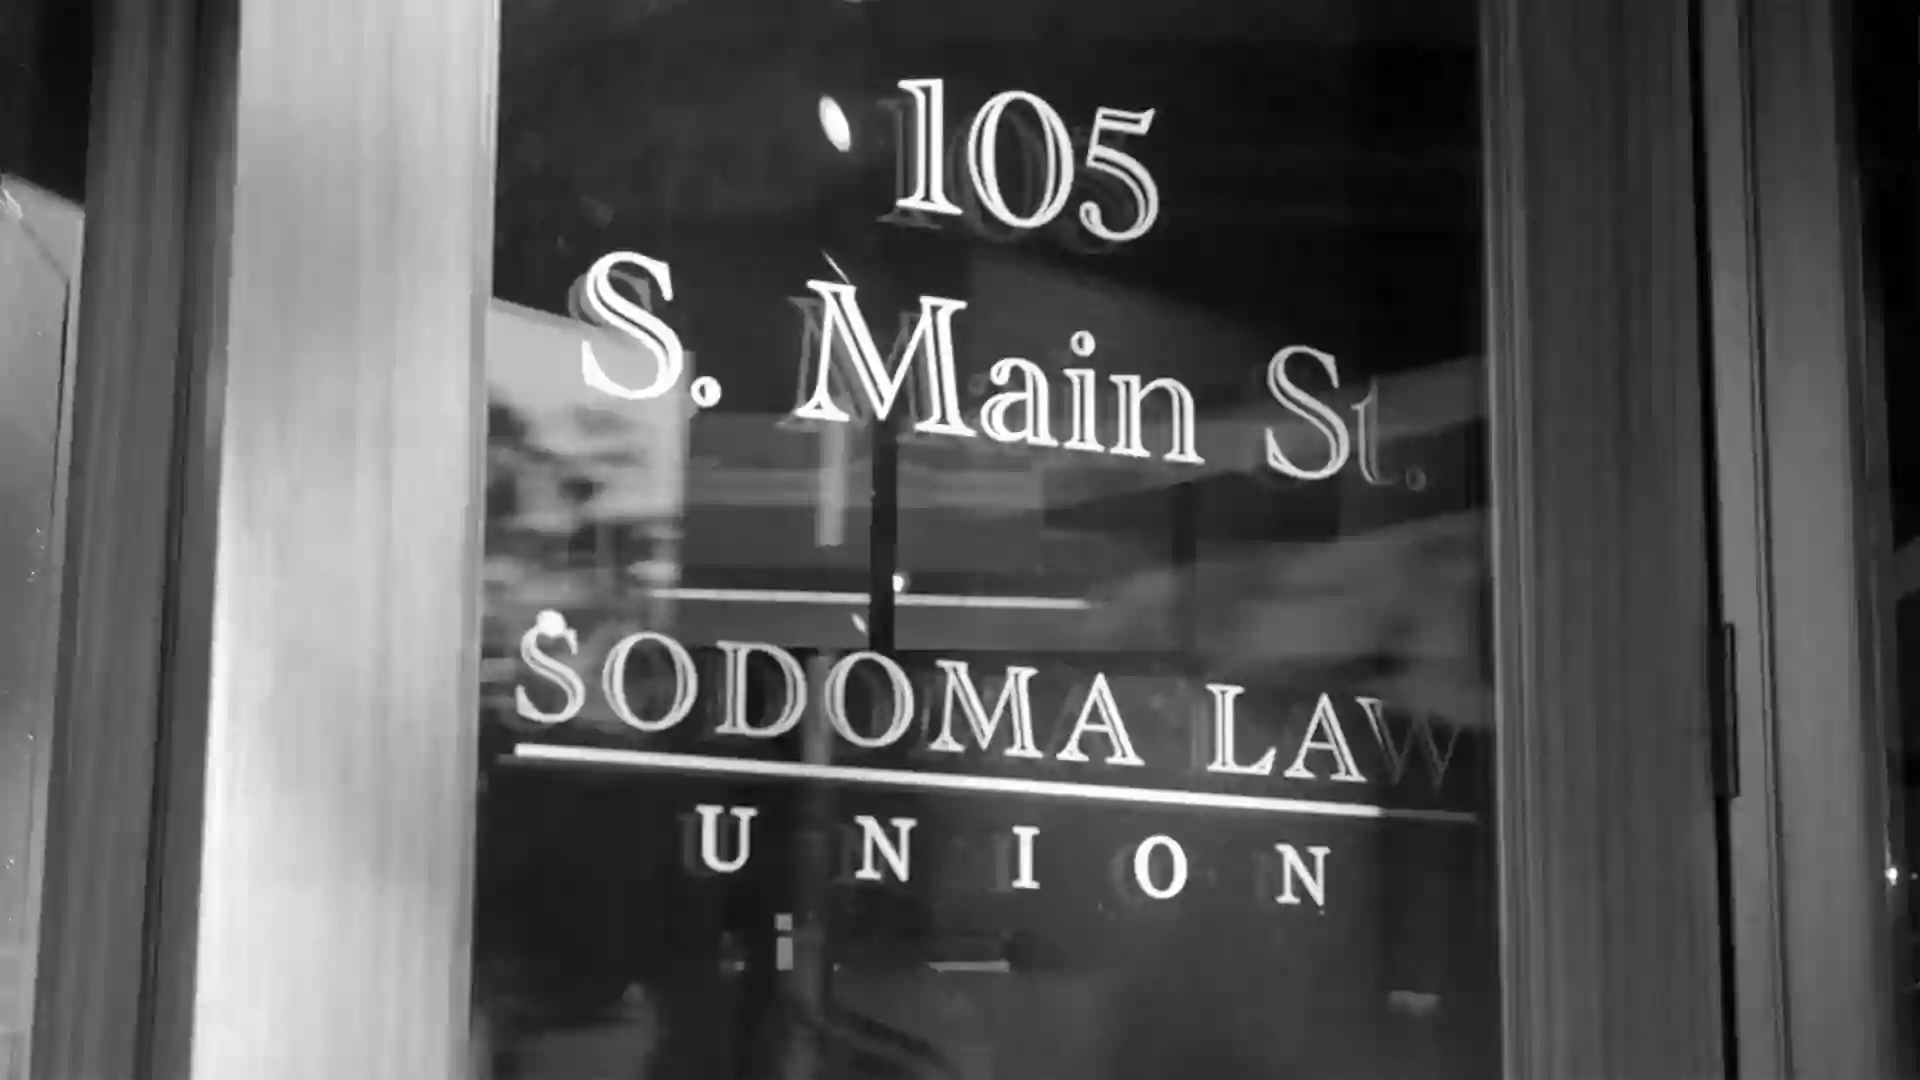 Sodoma Law Union